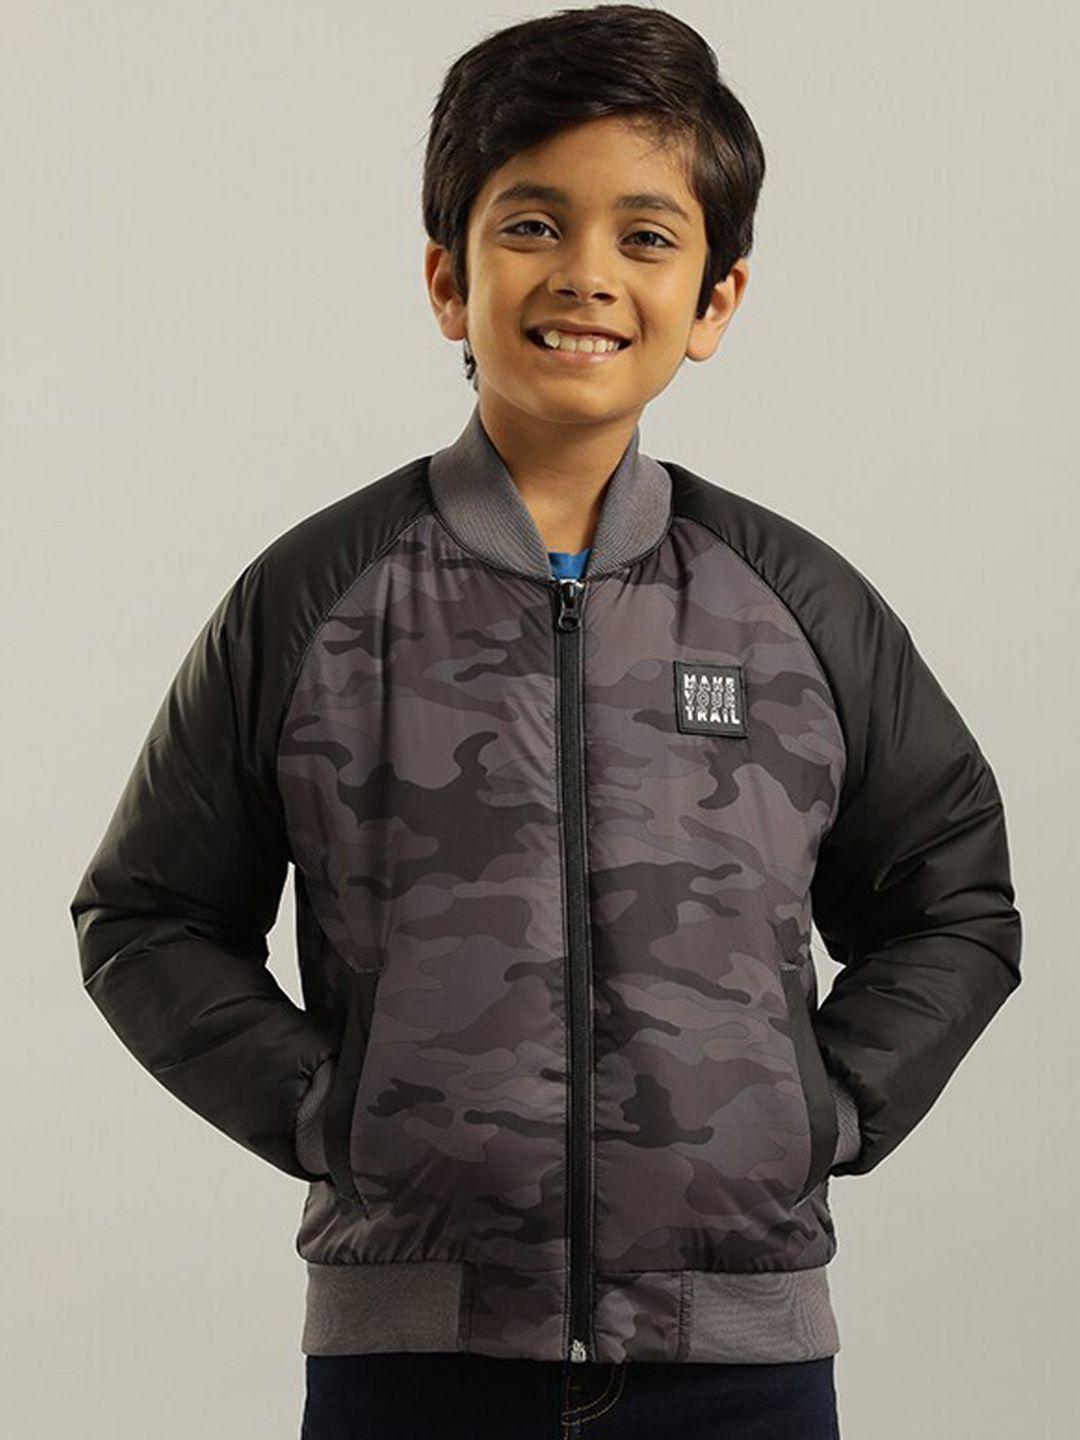 indian terrain boys black lightweight long sleeves outdoor fashion jacket